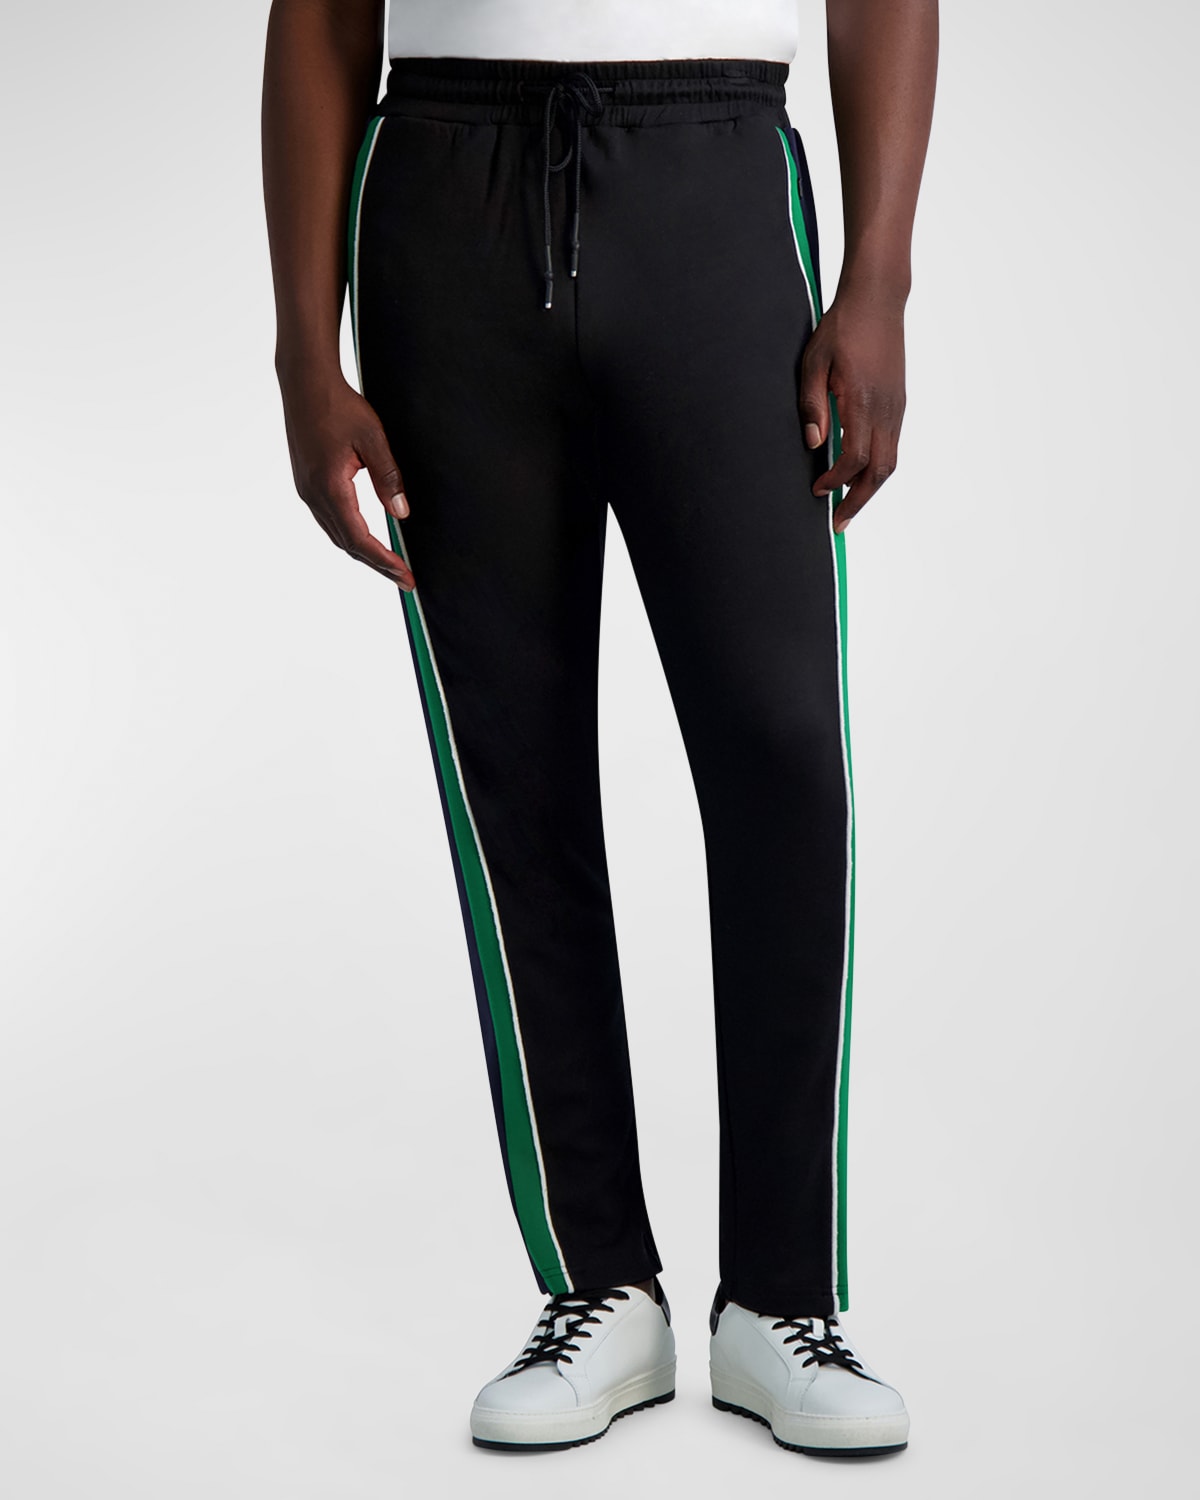 Men's Colorblocked Track Pants